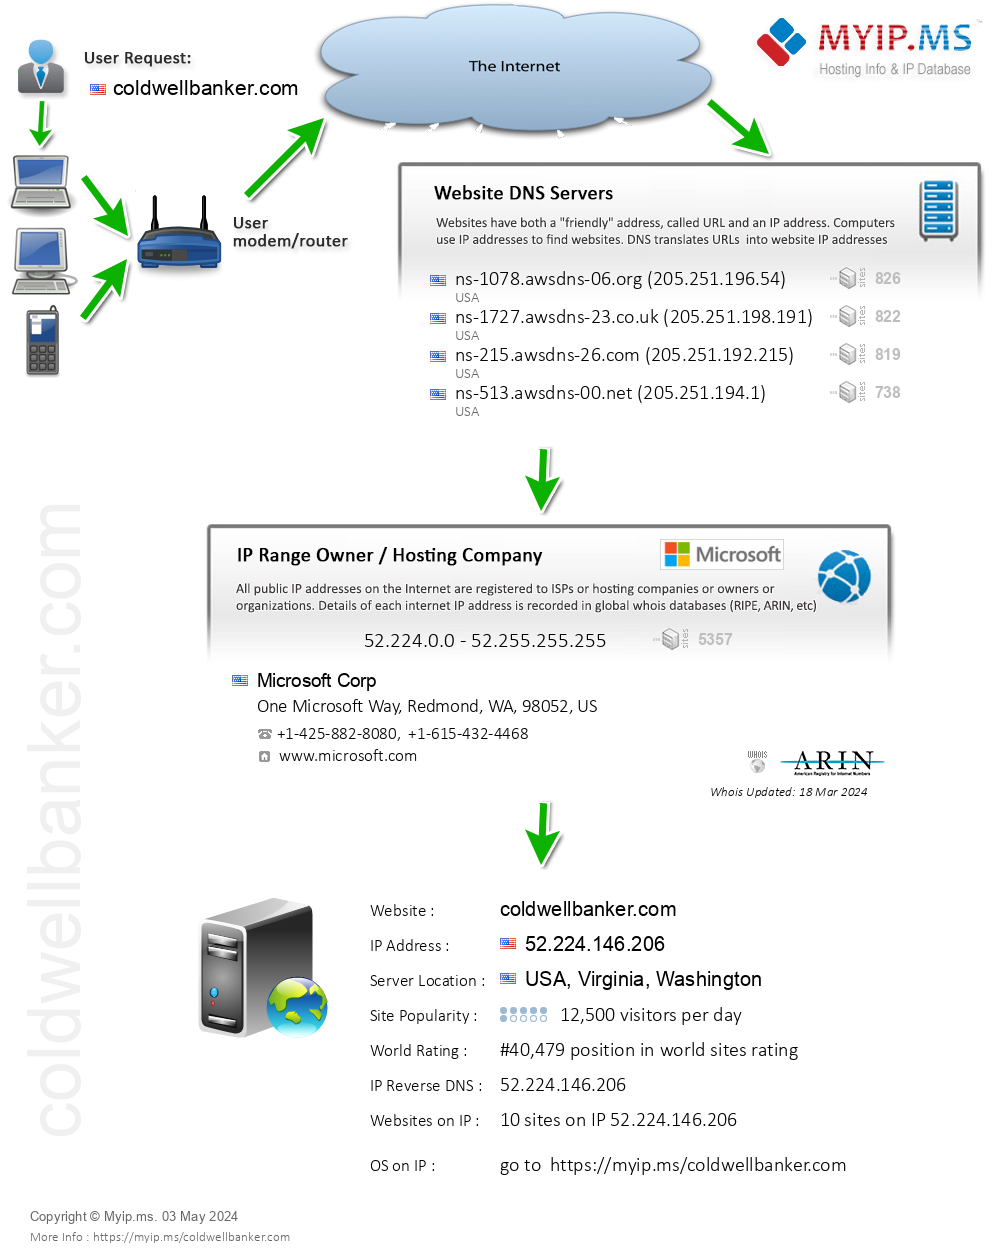 Coldwellbanker.com - Website Hosting Visual IP Diagram